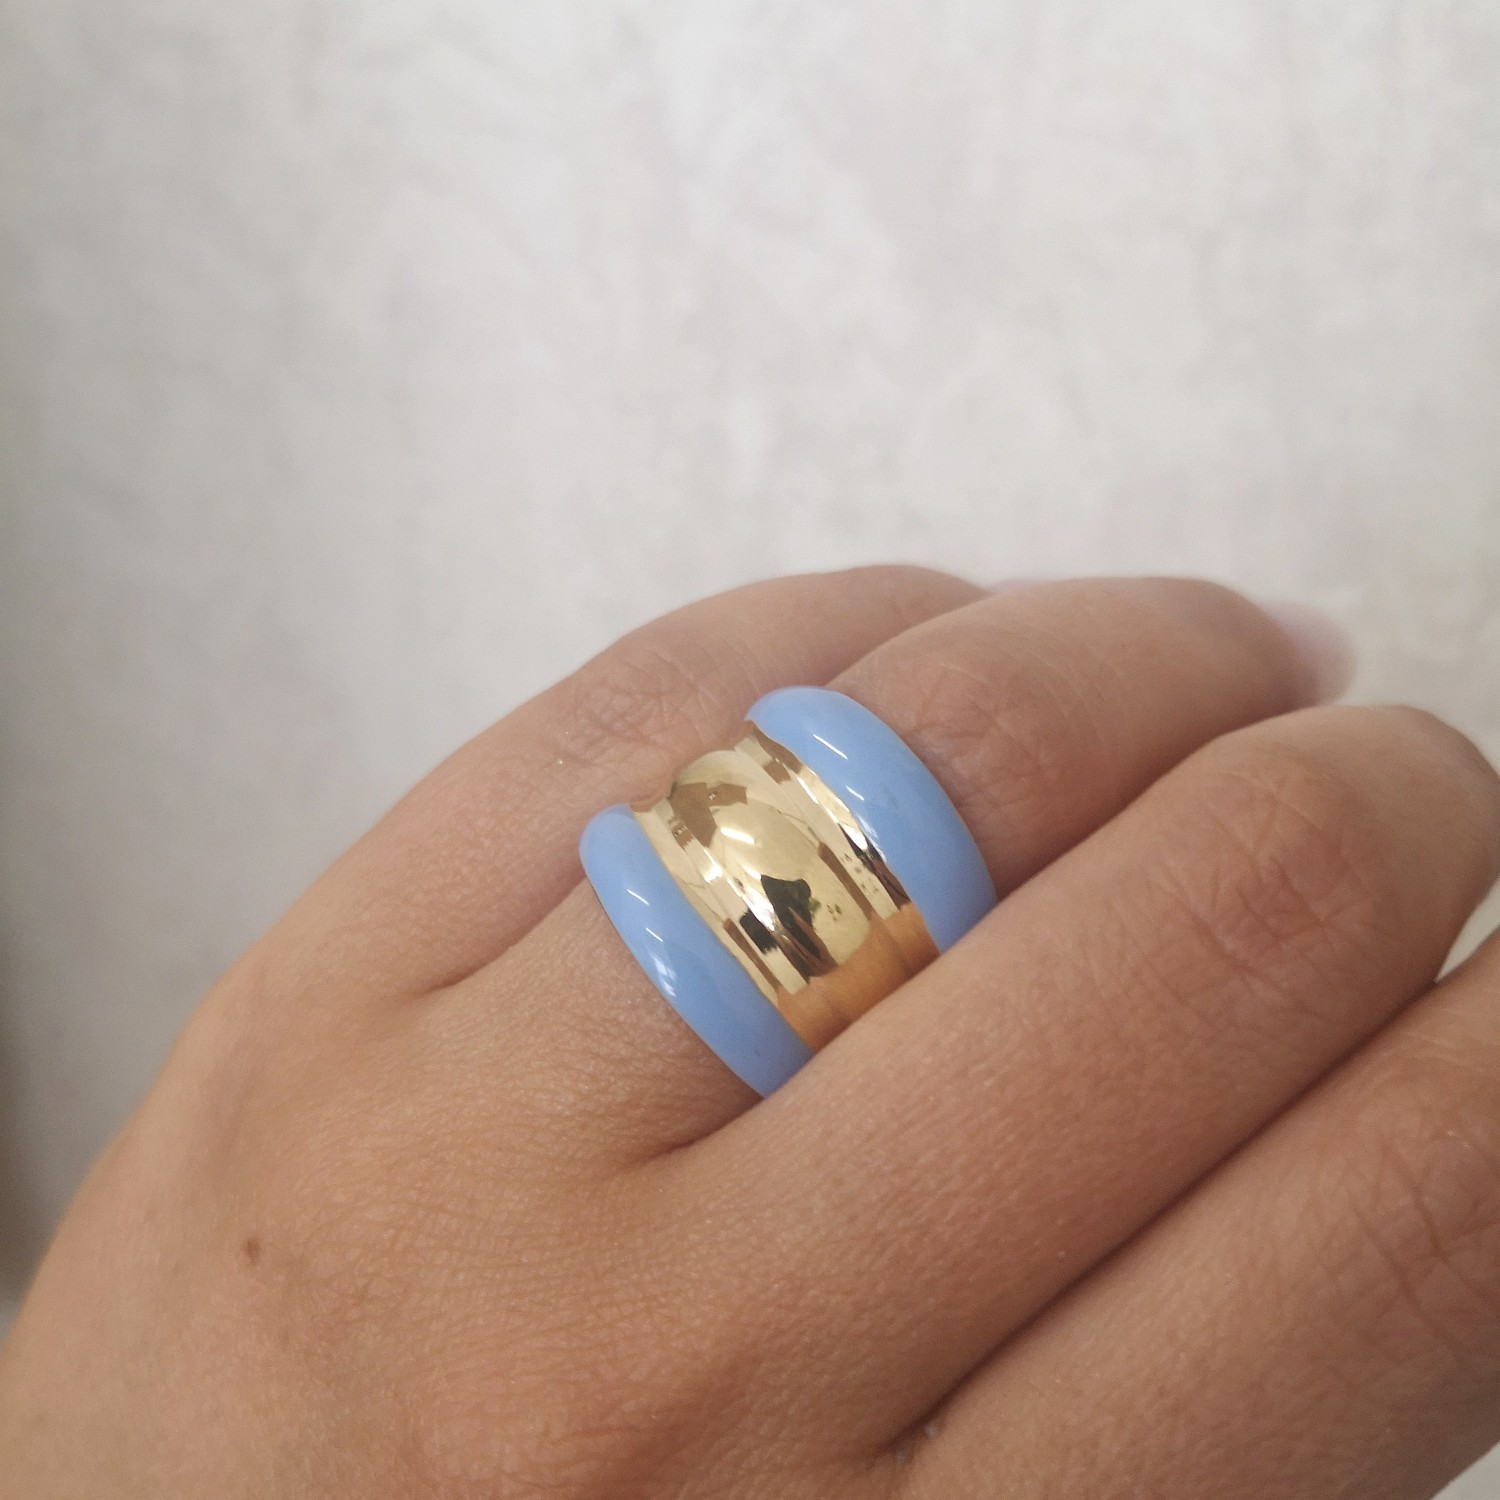 STAINLESS STEEL δαχτυλίδι ανοιγόμενο με σιέλ σμάλτο σε κίτρινο χρυσό.